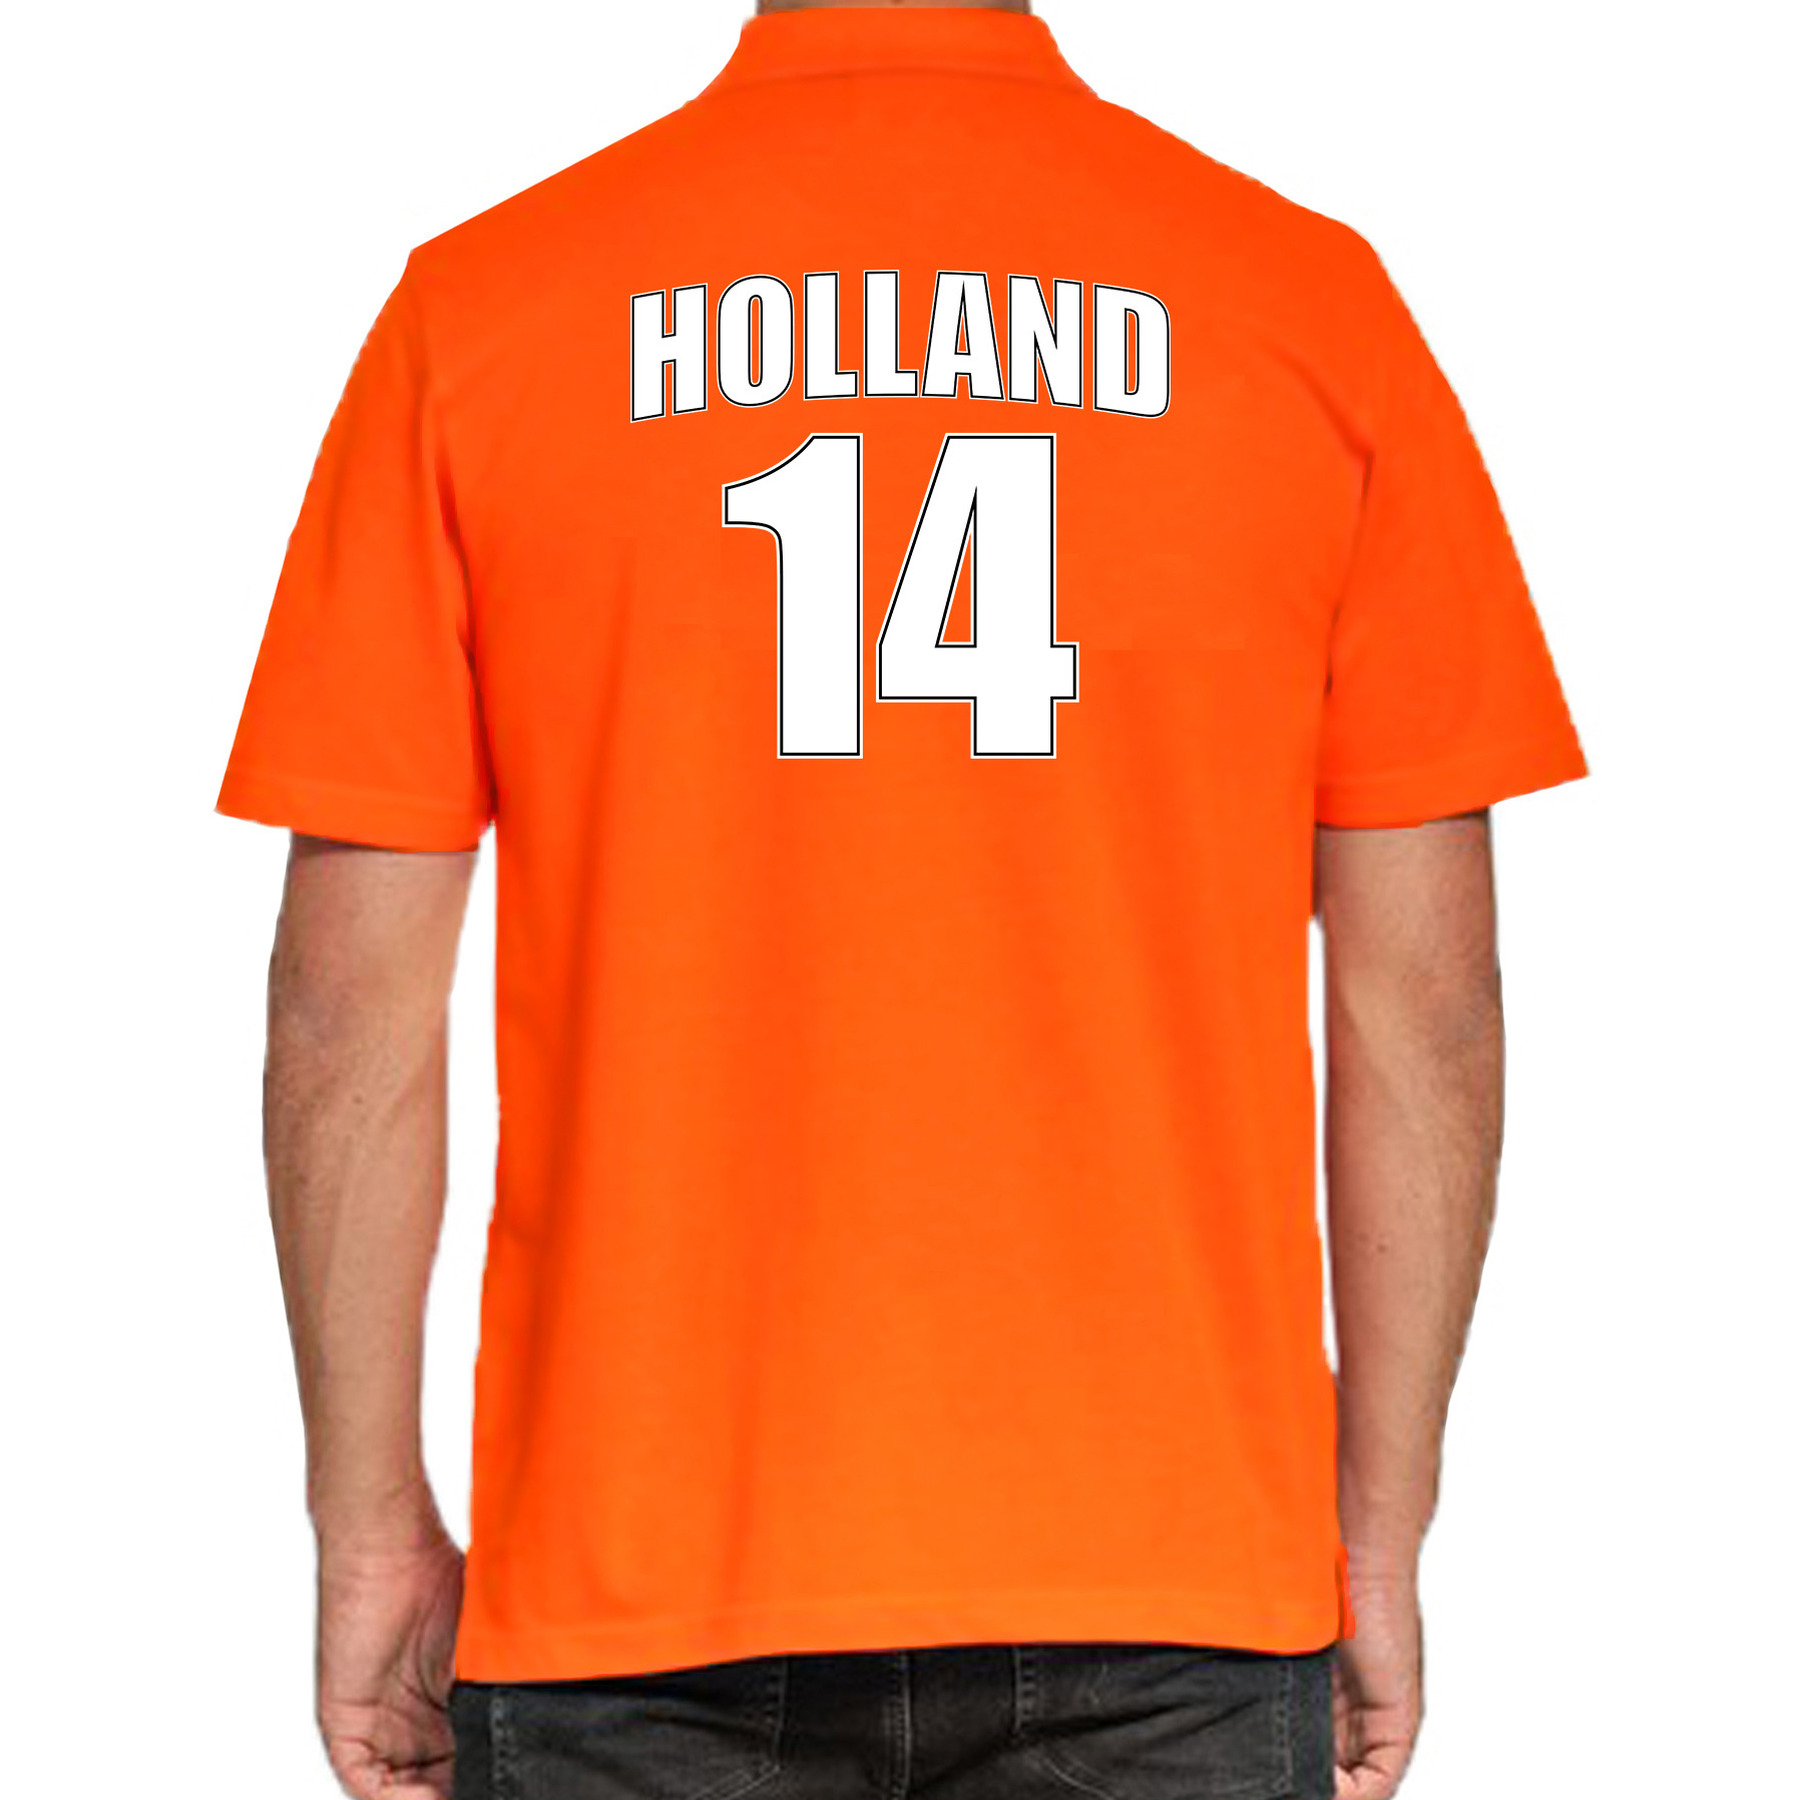 Oranje supporter poloshirt met rugnummer 14 - Holland - Nederland fan shirt voor heren